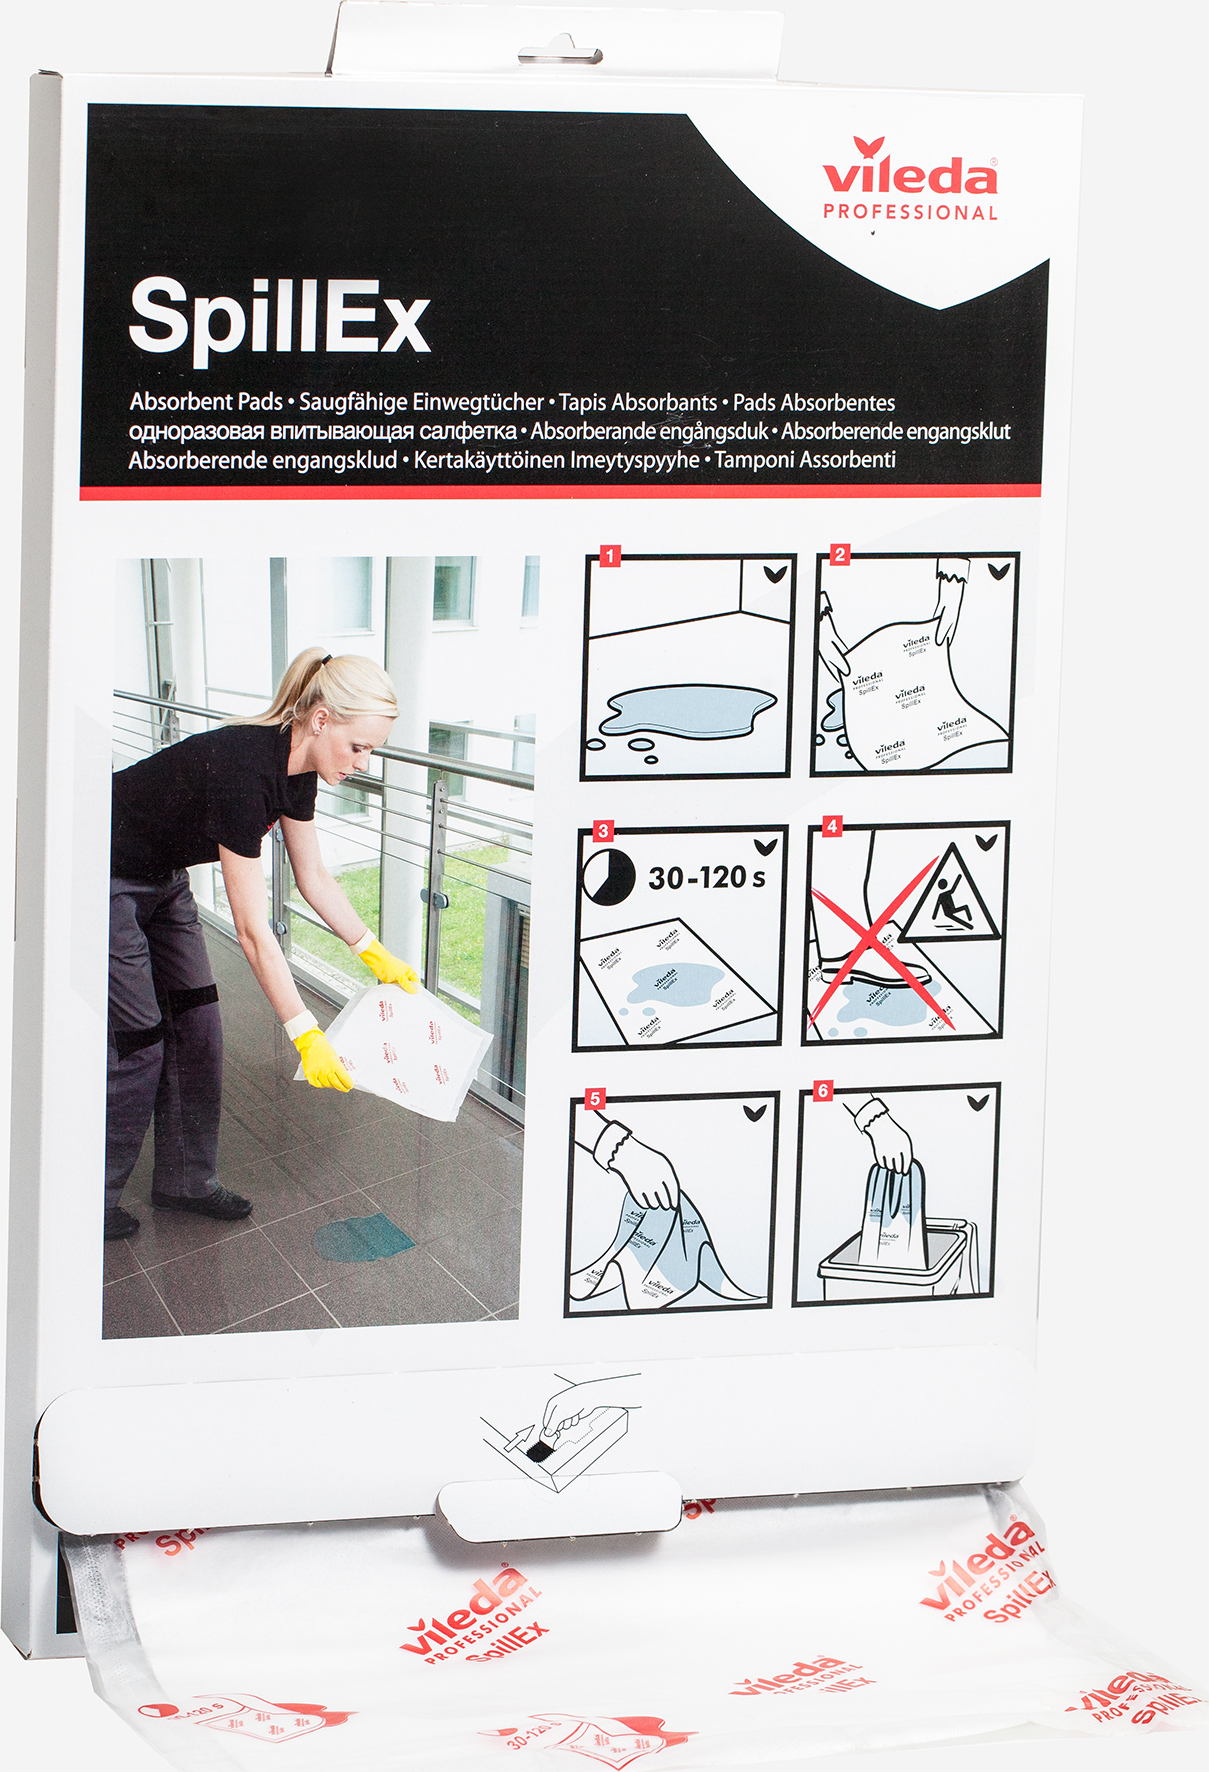 [8550299] SpillEx engångsduk absorberand